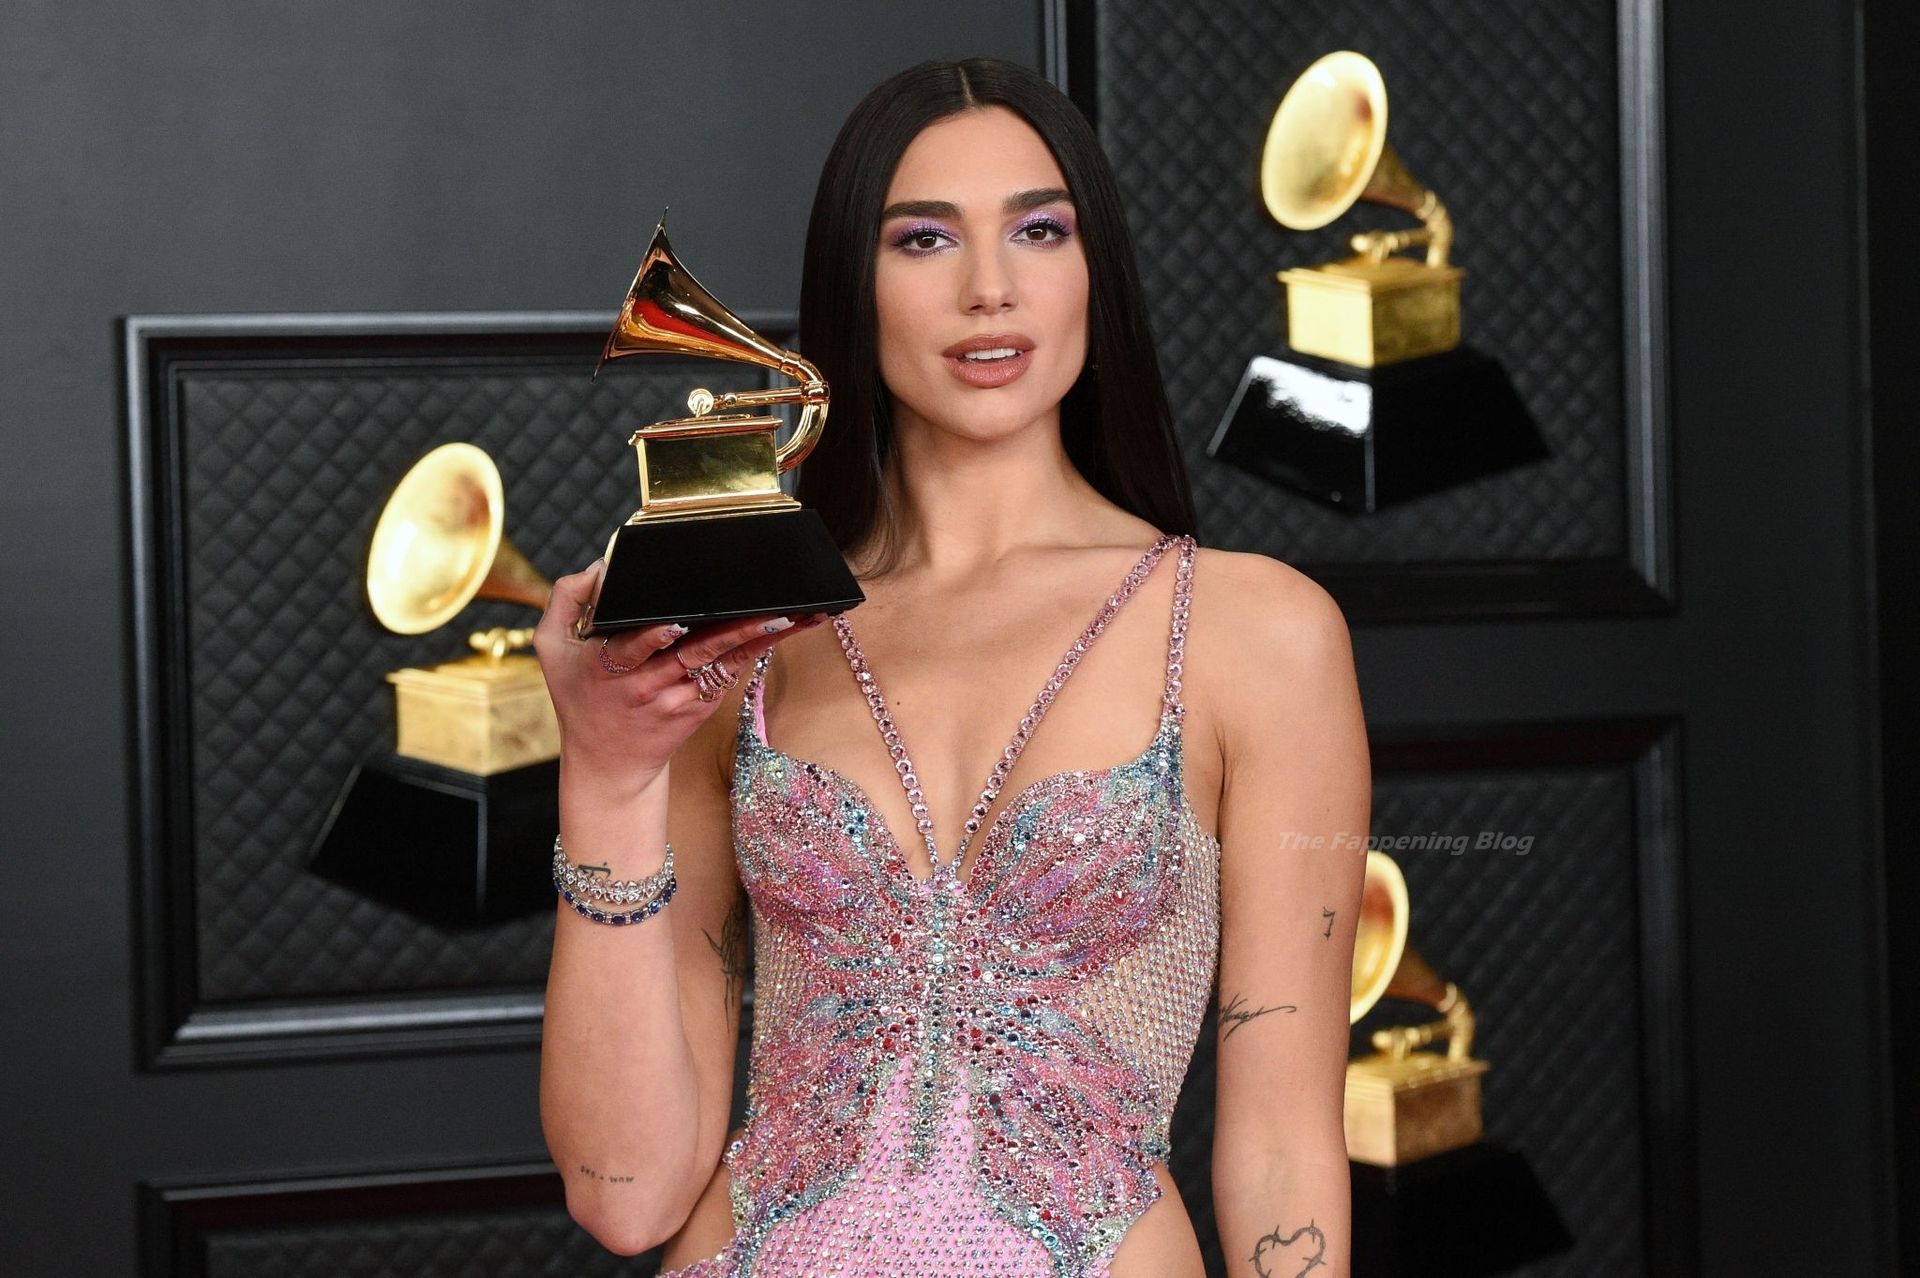 Dua Lipa Affiche Sa Silhouette Sexy Aux 63e Grammy Awards Annuels 58